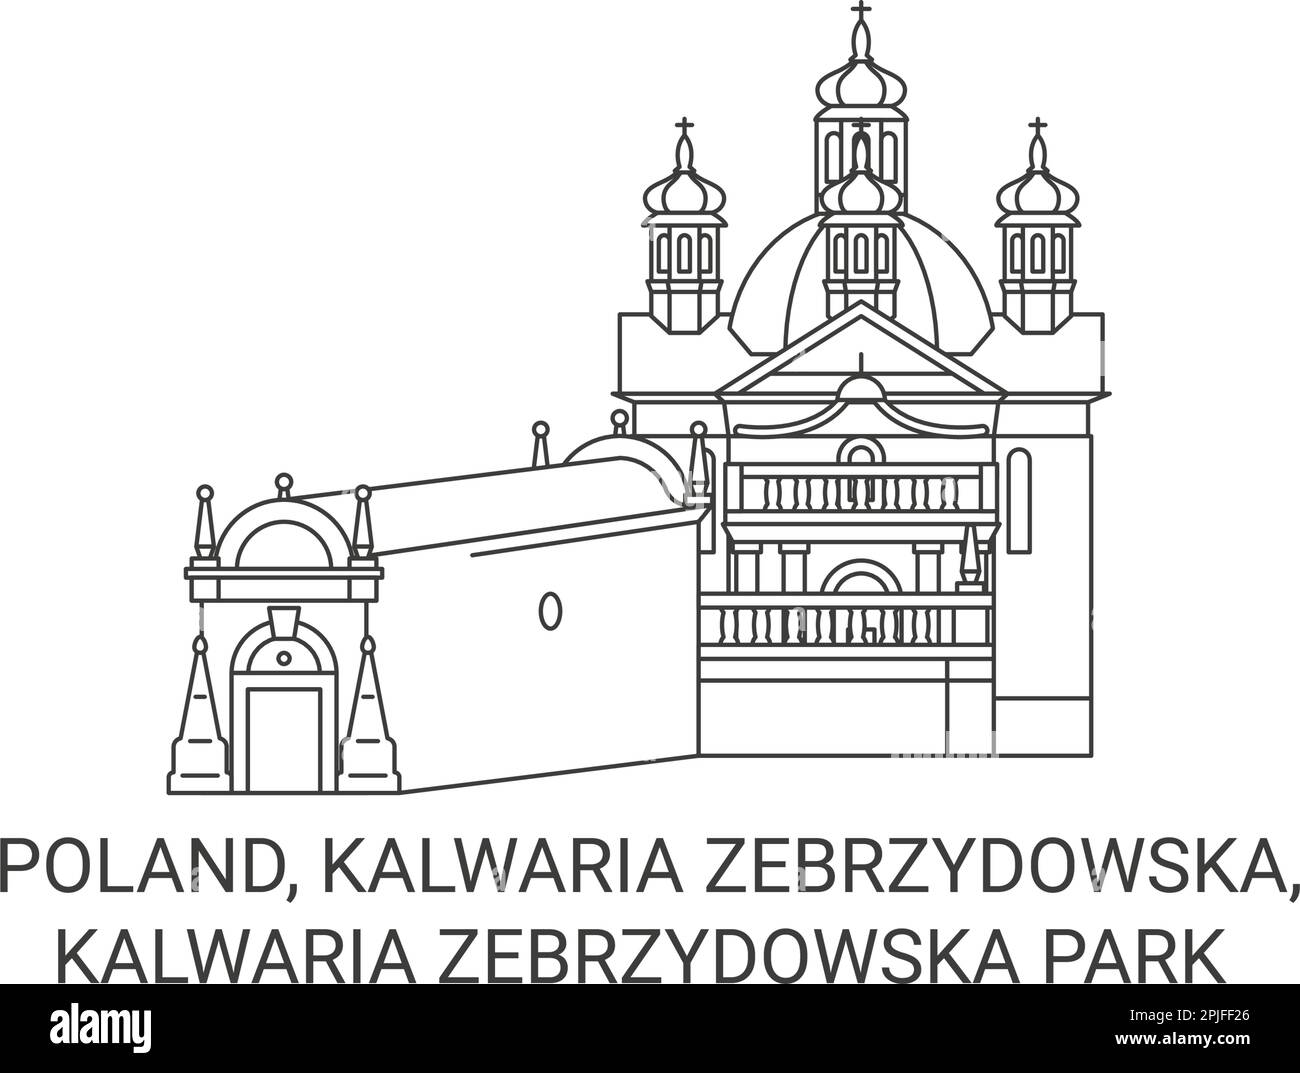 Pologne, Kalwaria Zebrzydowska, Kalwaria Zebrzydowska Park illustration vectorielle de voyage Illustration de Vecteur